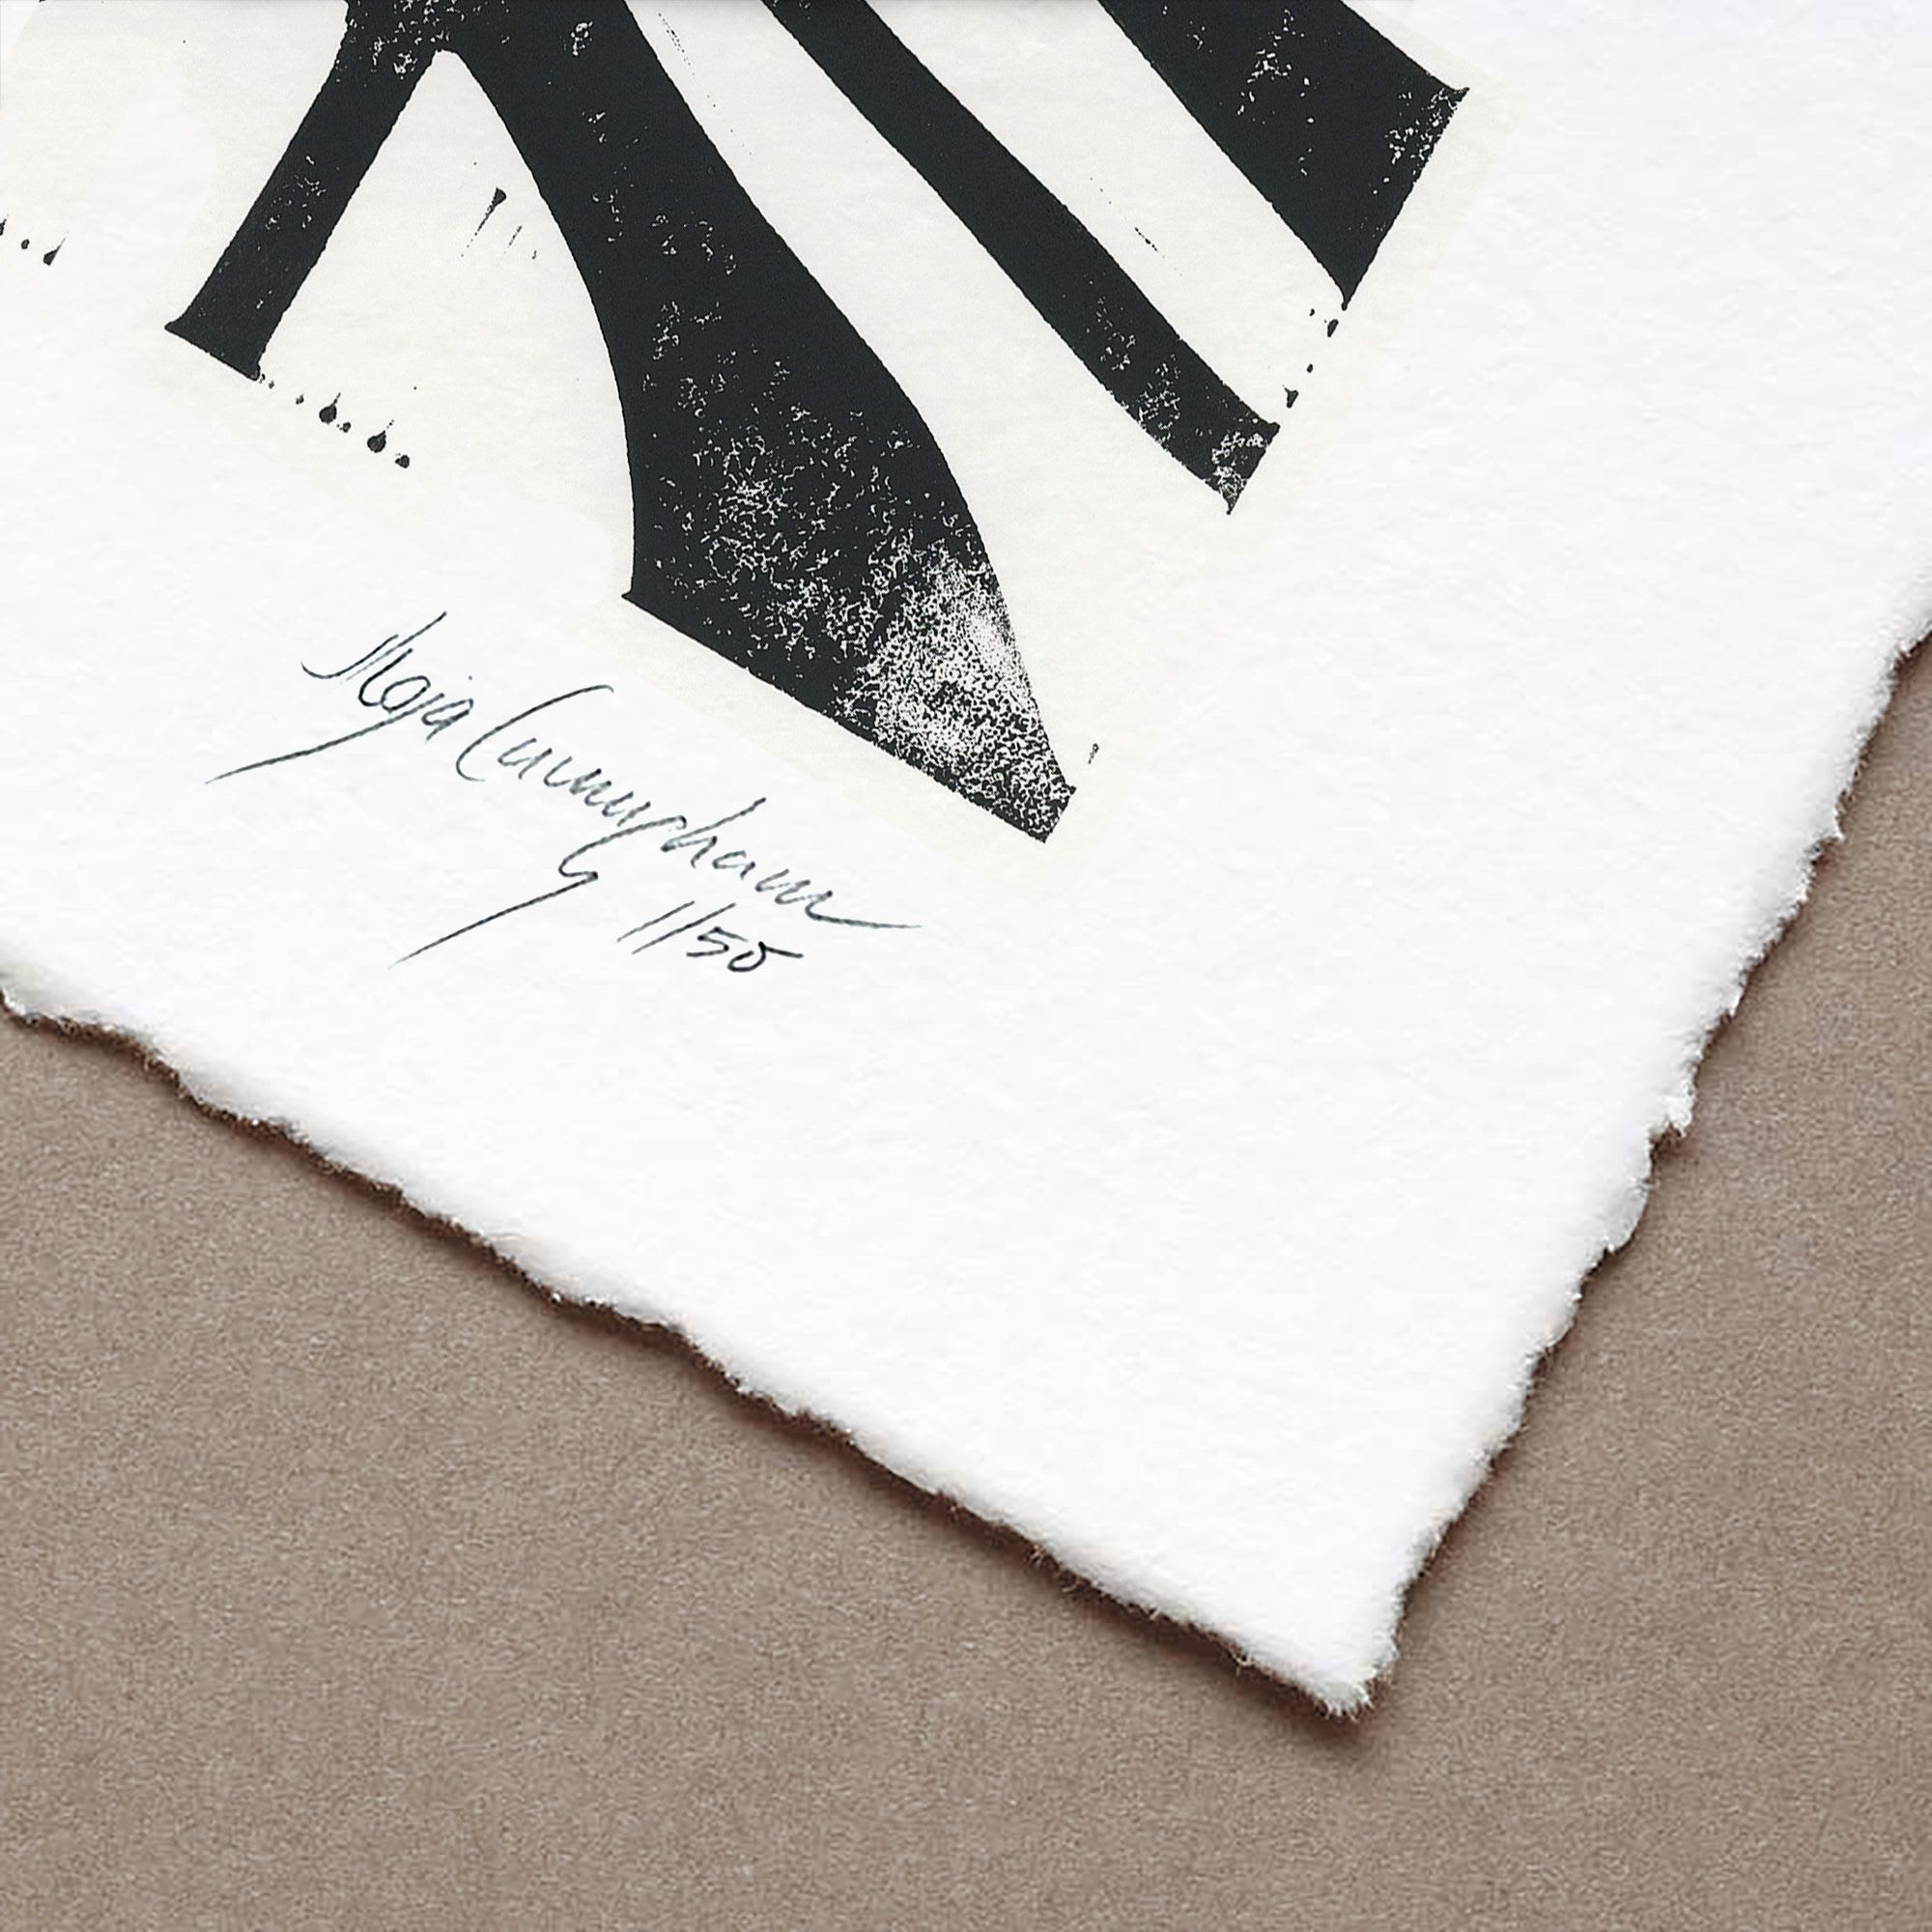 Linocut Tools on White Background with Linoleum Pieces Stock Photo - Image  of creativity, handmade: 212922578